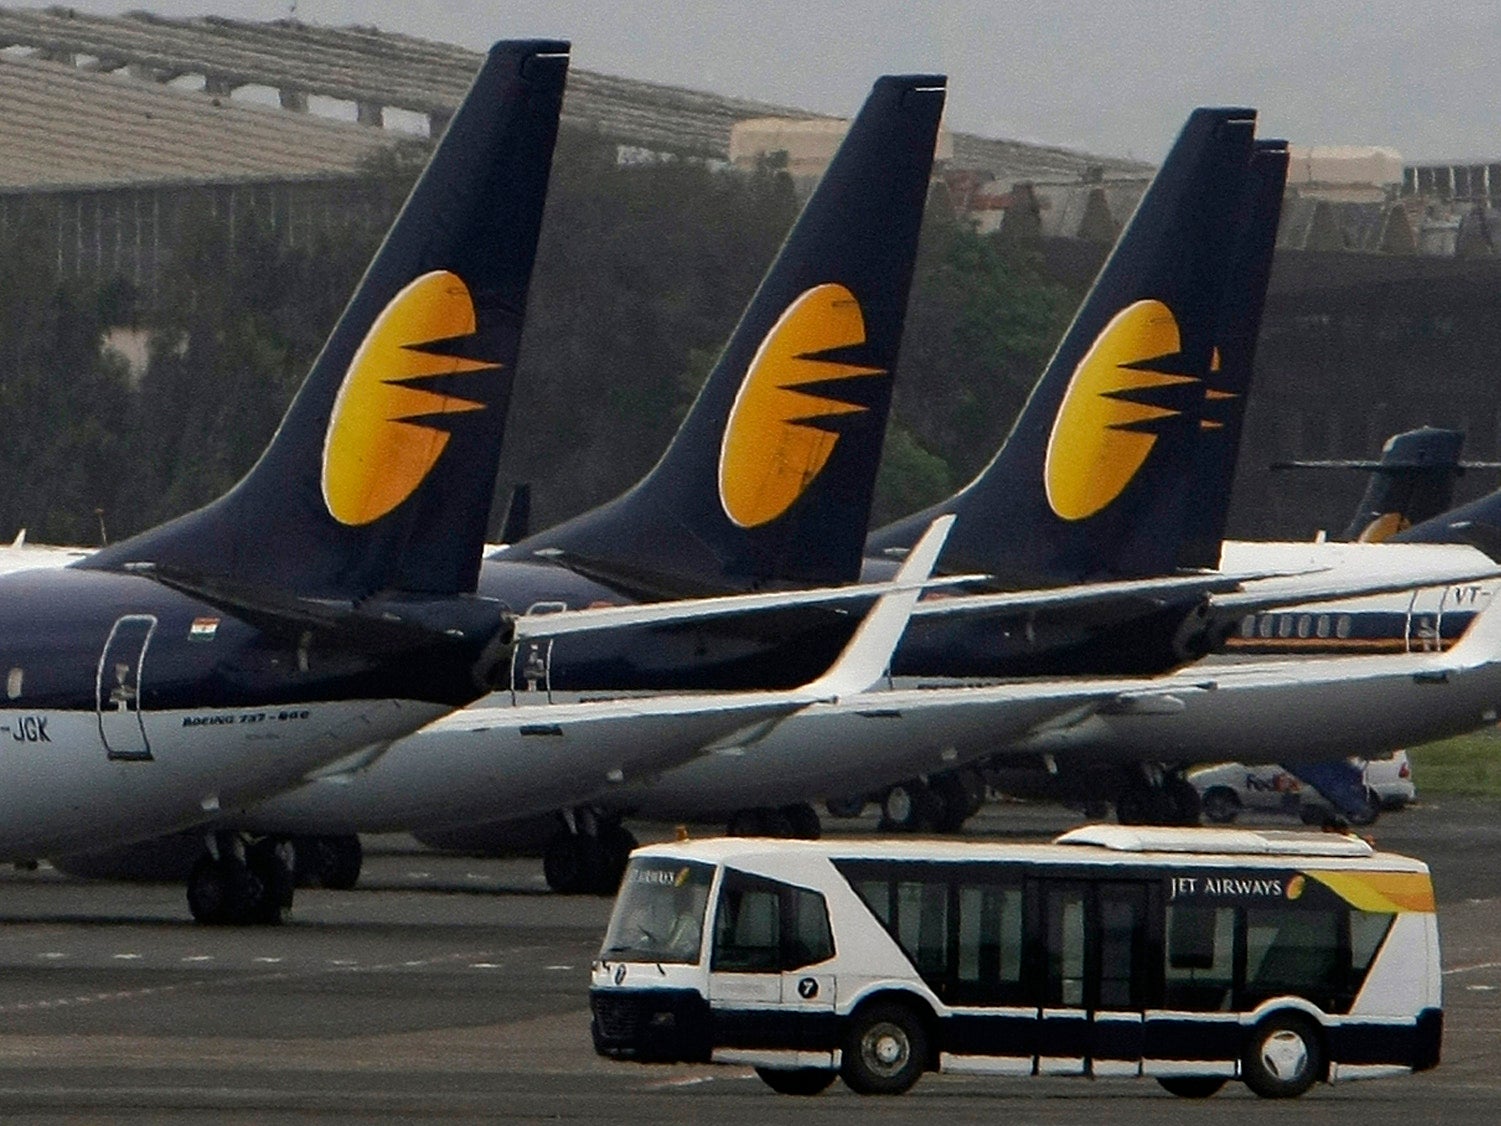 Jet Airways has debts approaching £1bn